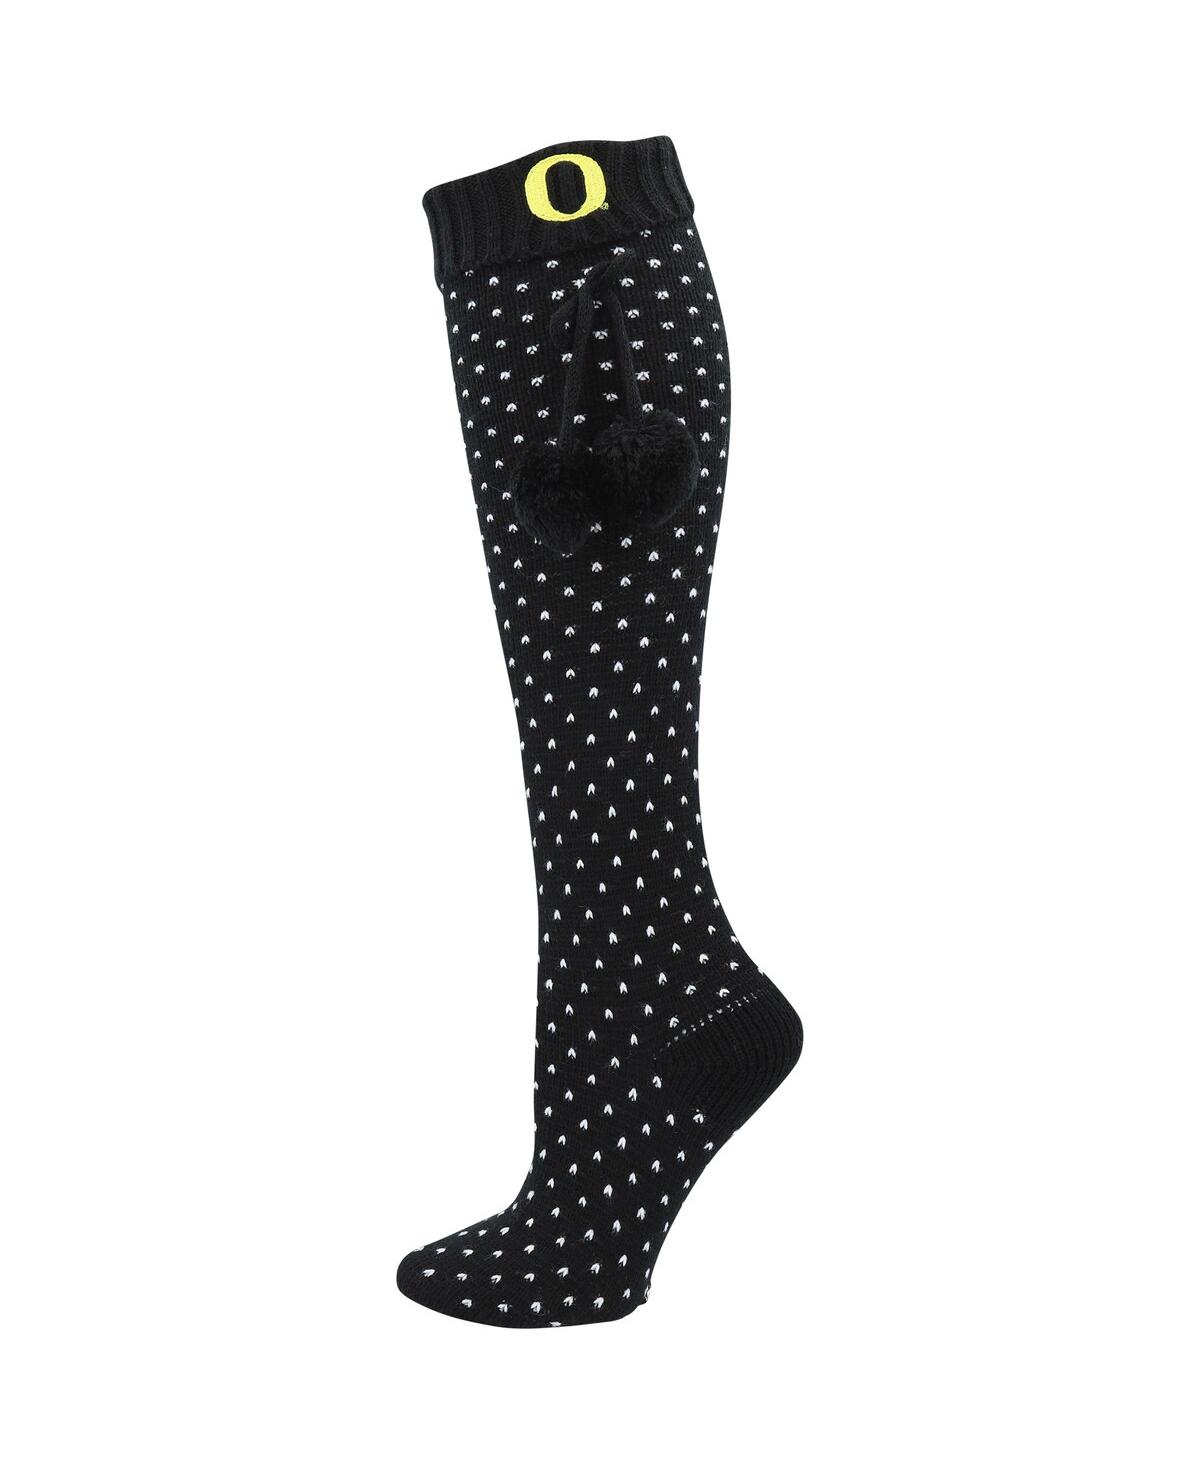 Zoozatz Women's  Black Oregon Ducks Knee High Socks